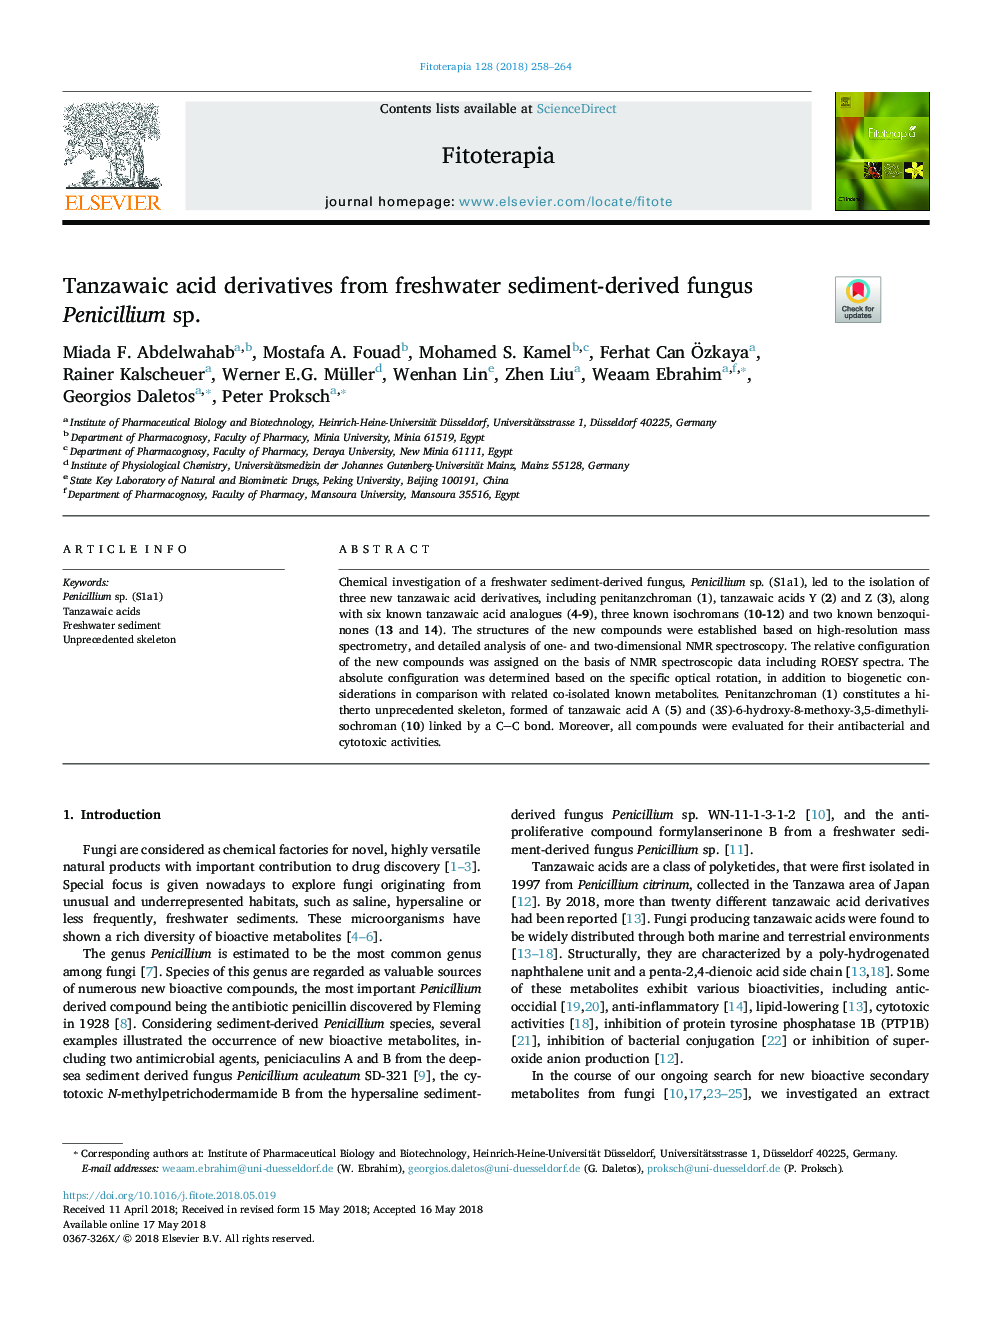 Tanzawaic acid derivatives from freshwater sediment-derived fungus Penicillium sp.